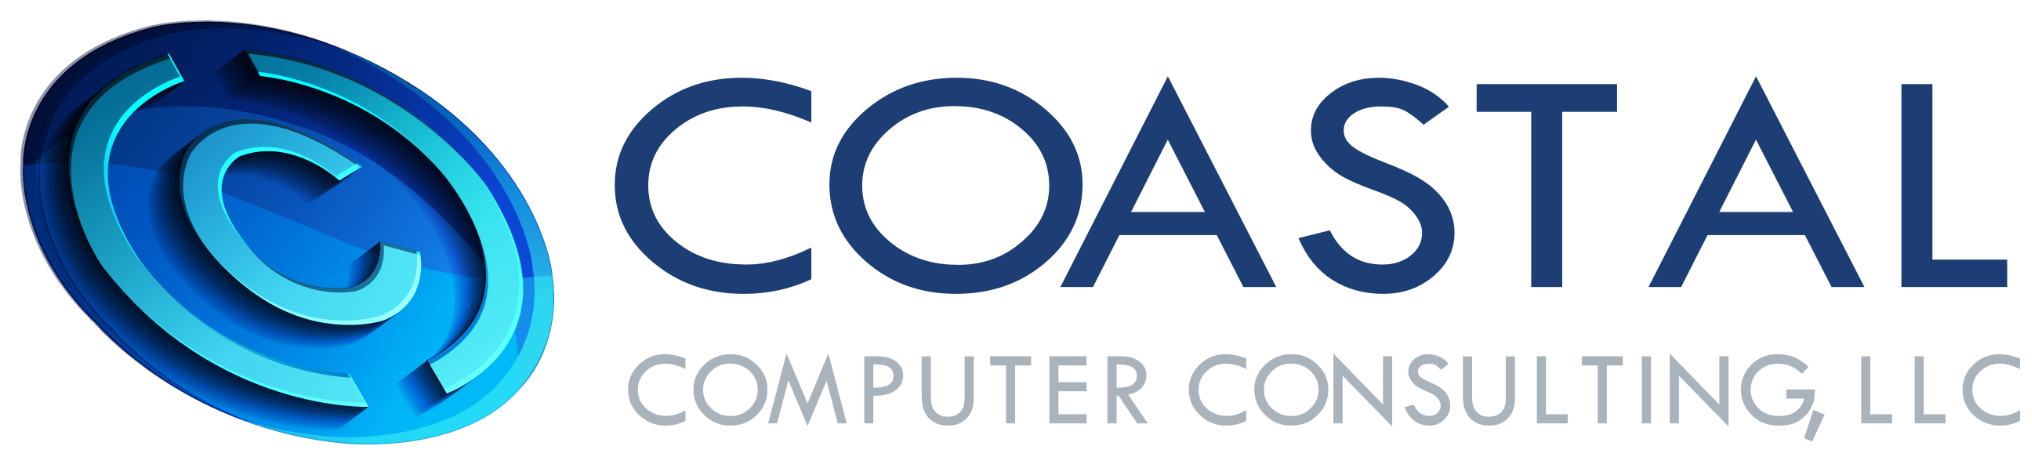 Coastal Computer Consulting